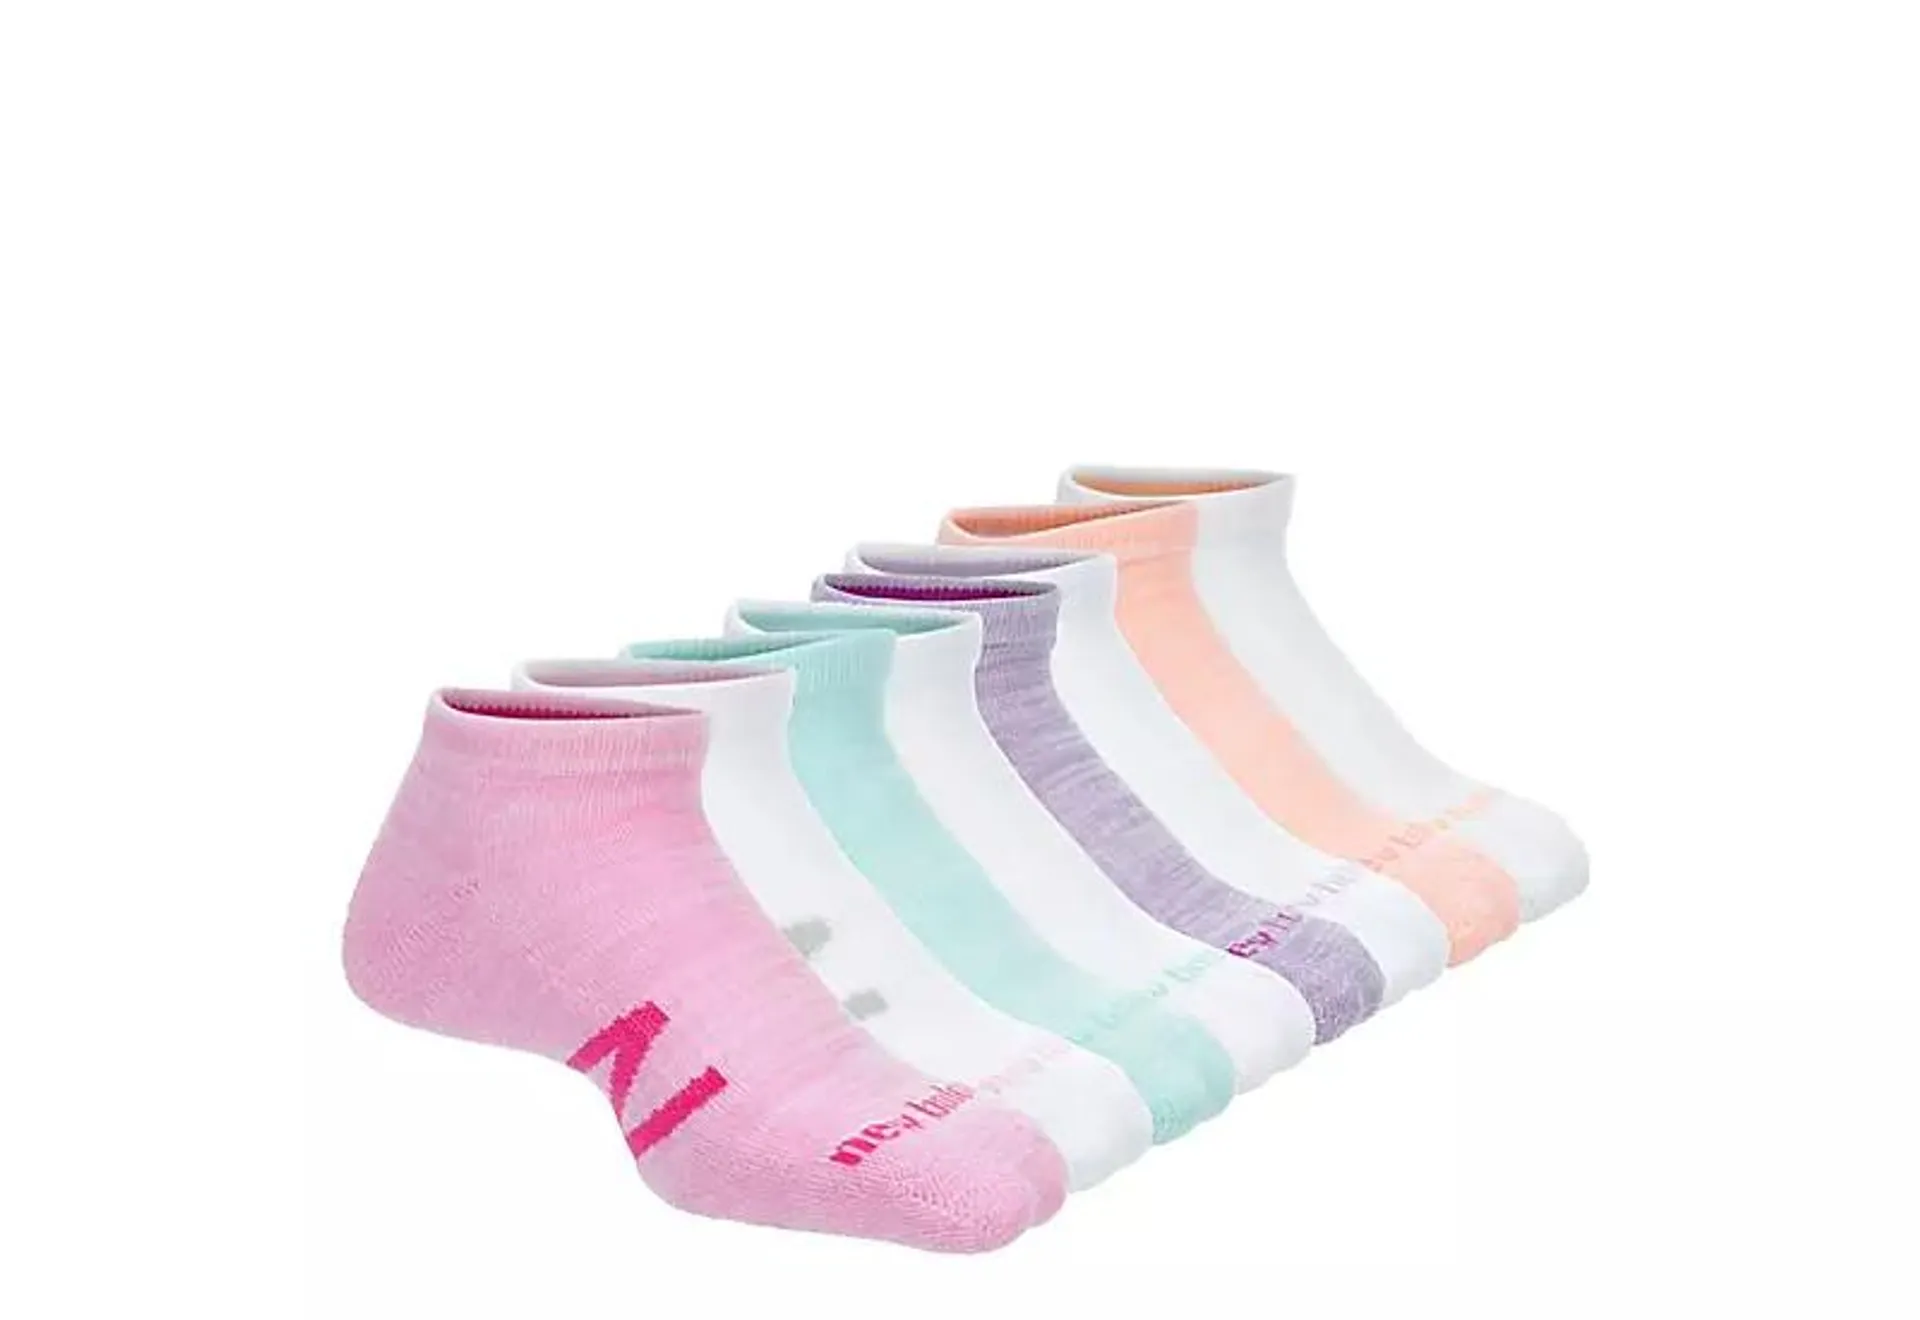 New Balance Girls Low Cut Athletic Socks 8 Pairs - White